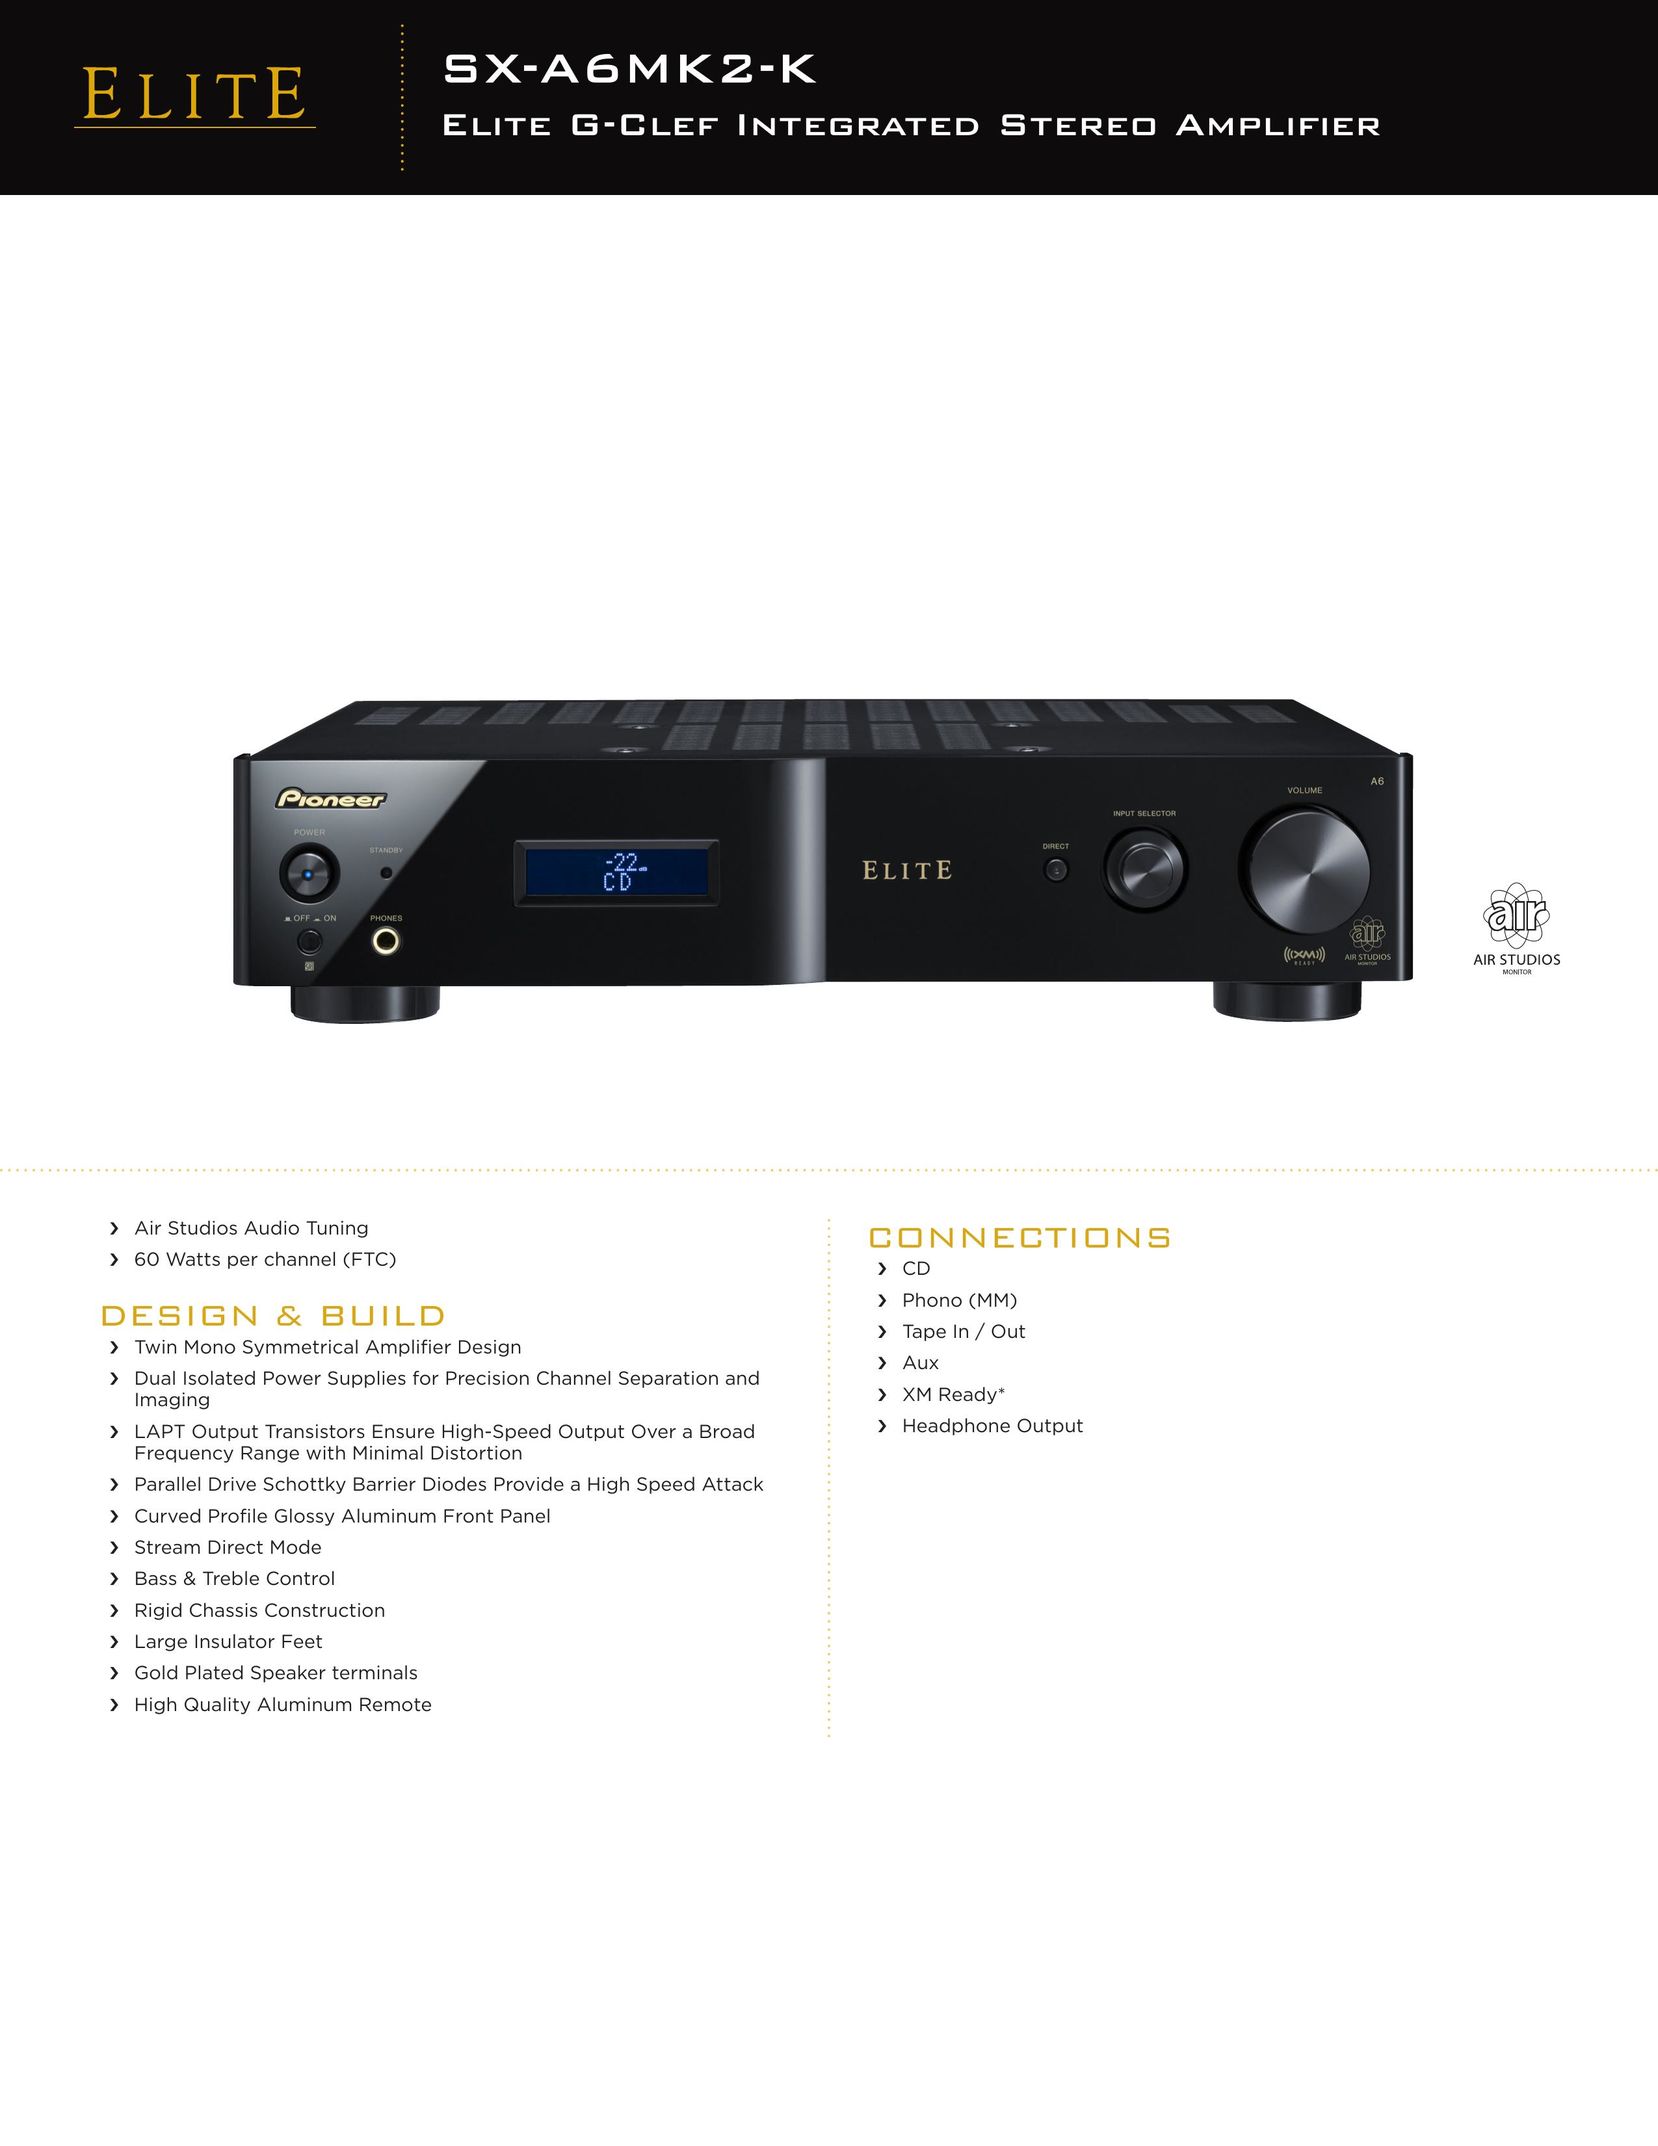 Pioneer SX-A6MK2-K Stereo Amplifier User Manual